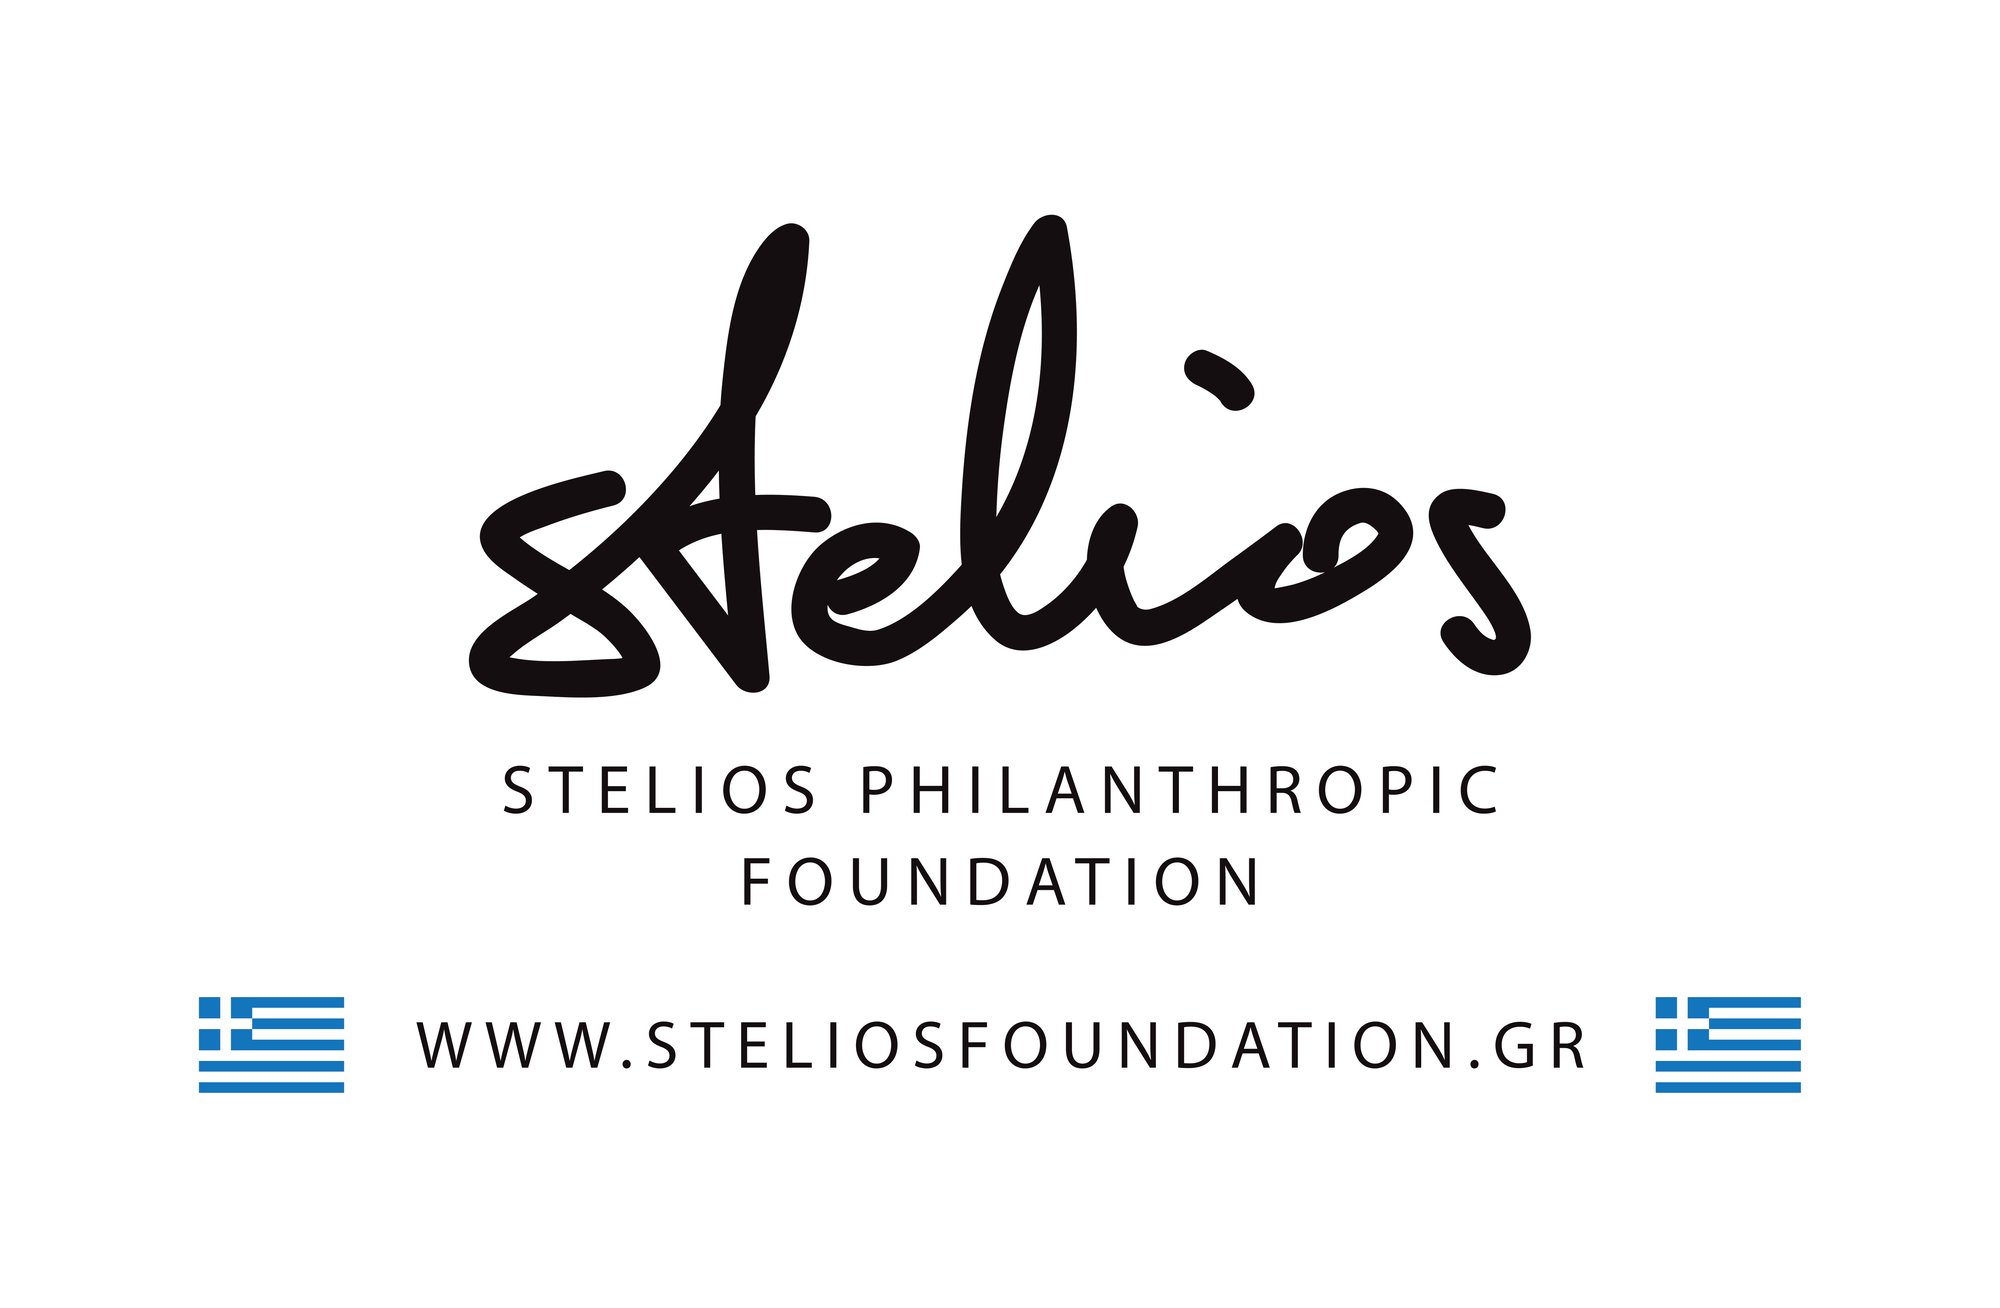 Stelios Philanthropic Foundation Greece Logo - High Quality